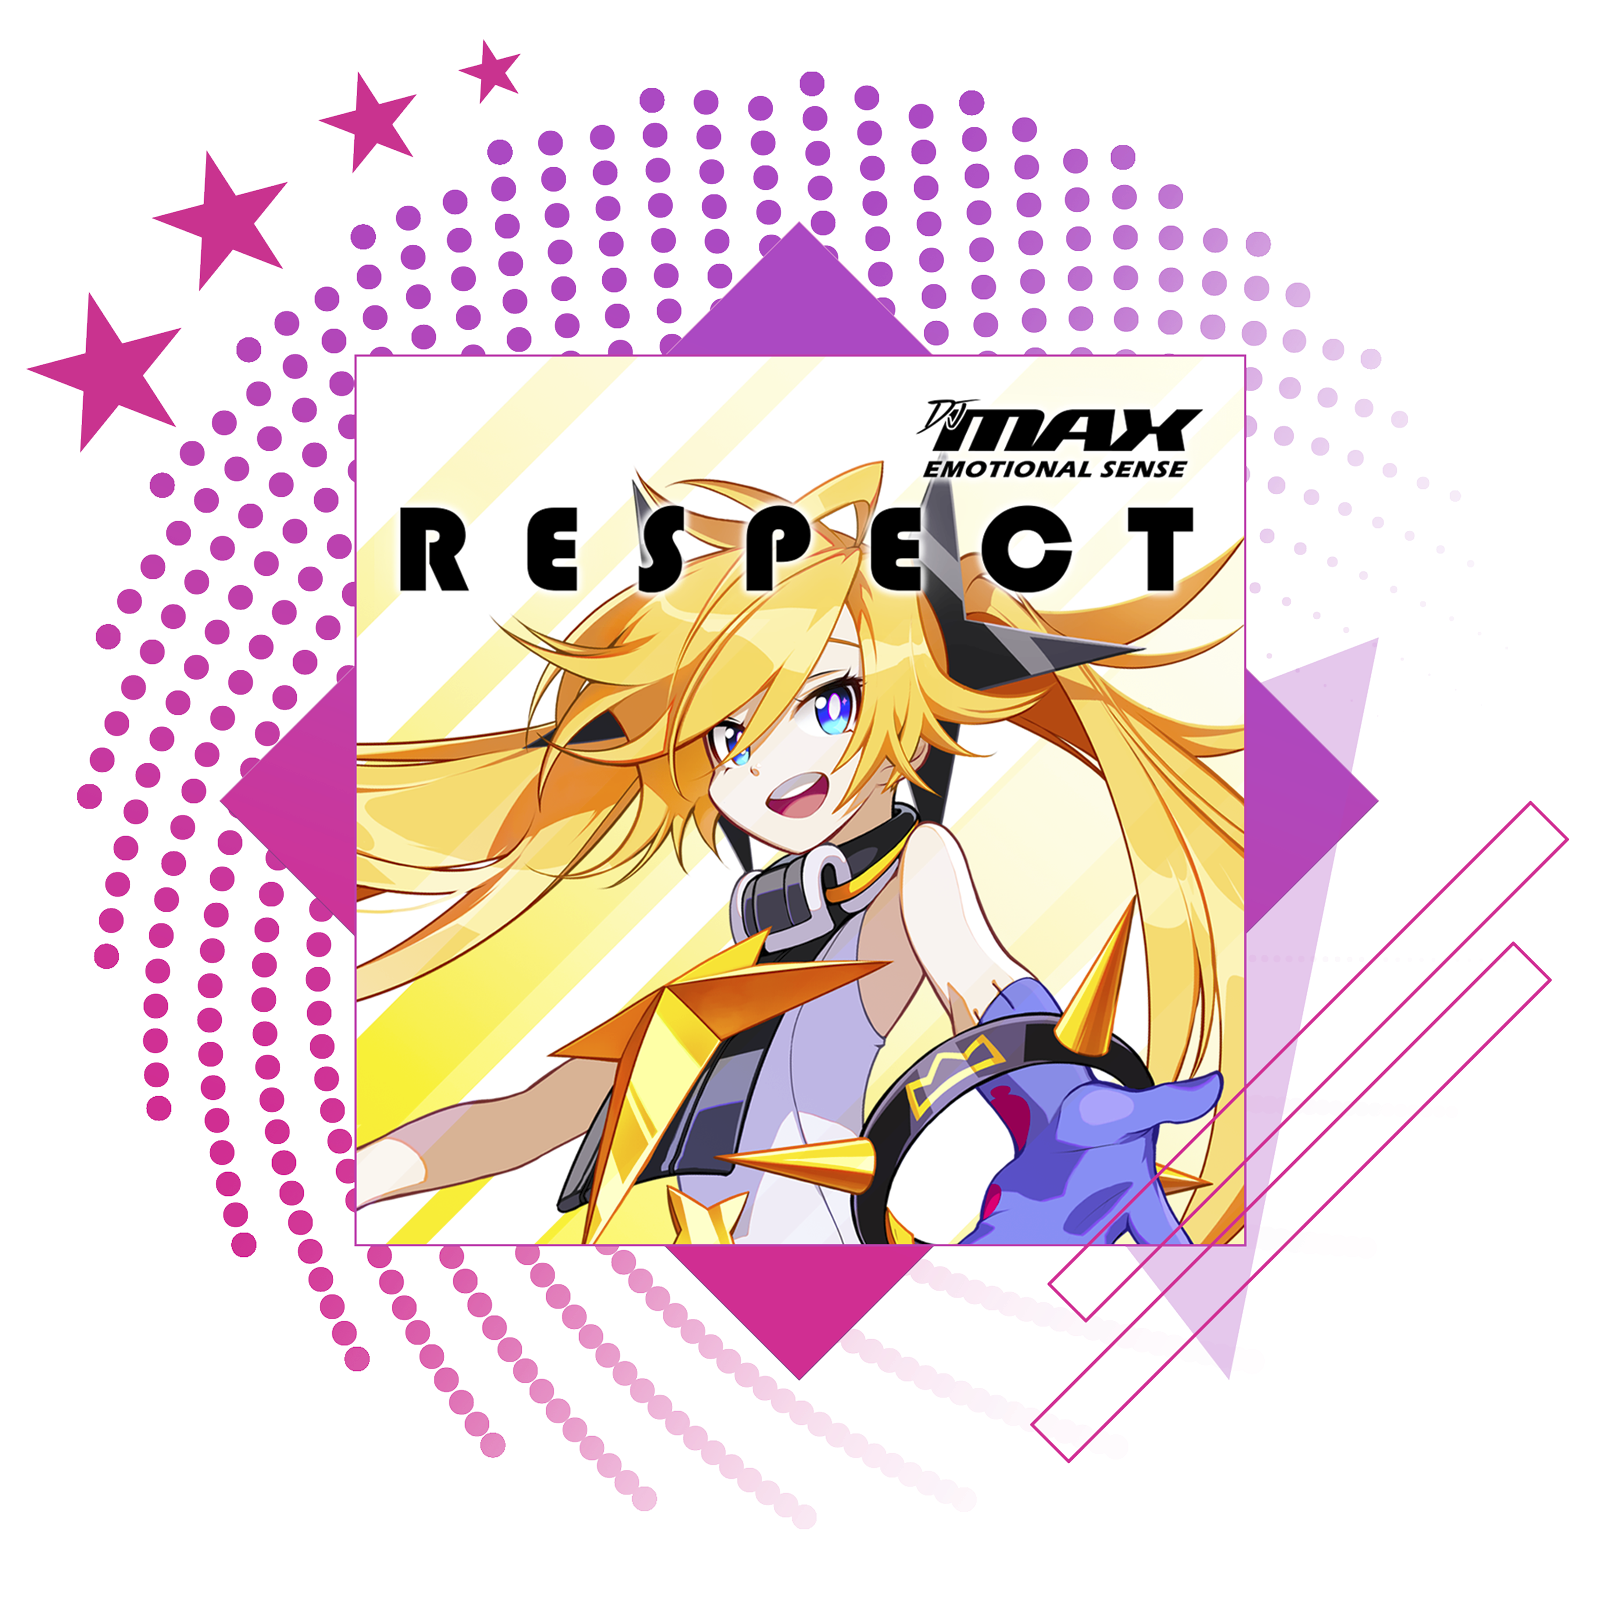 DJMax Respect의 키 아트를 보여주는 순위권 리듬 게임 피처 이미지.